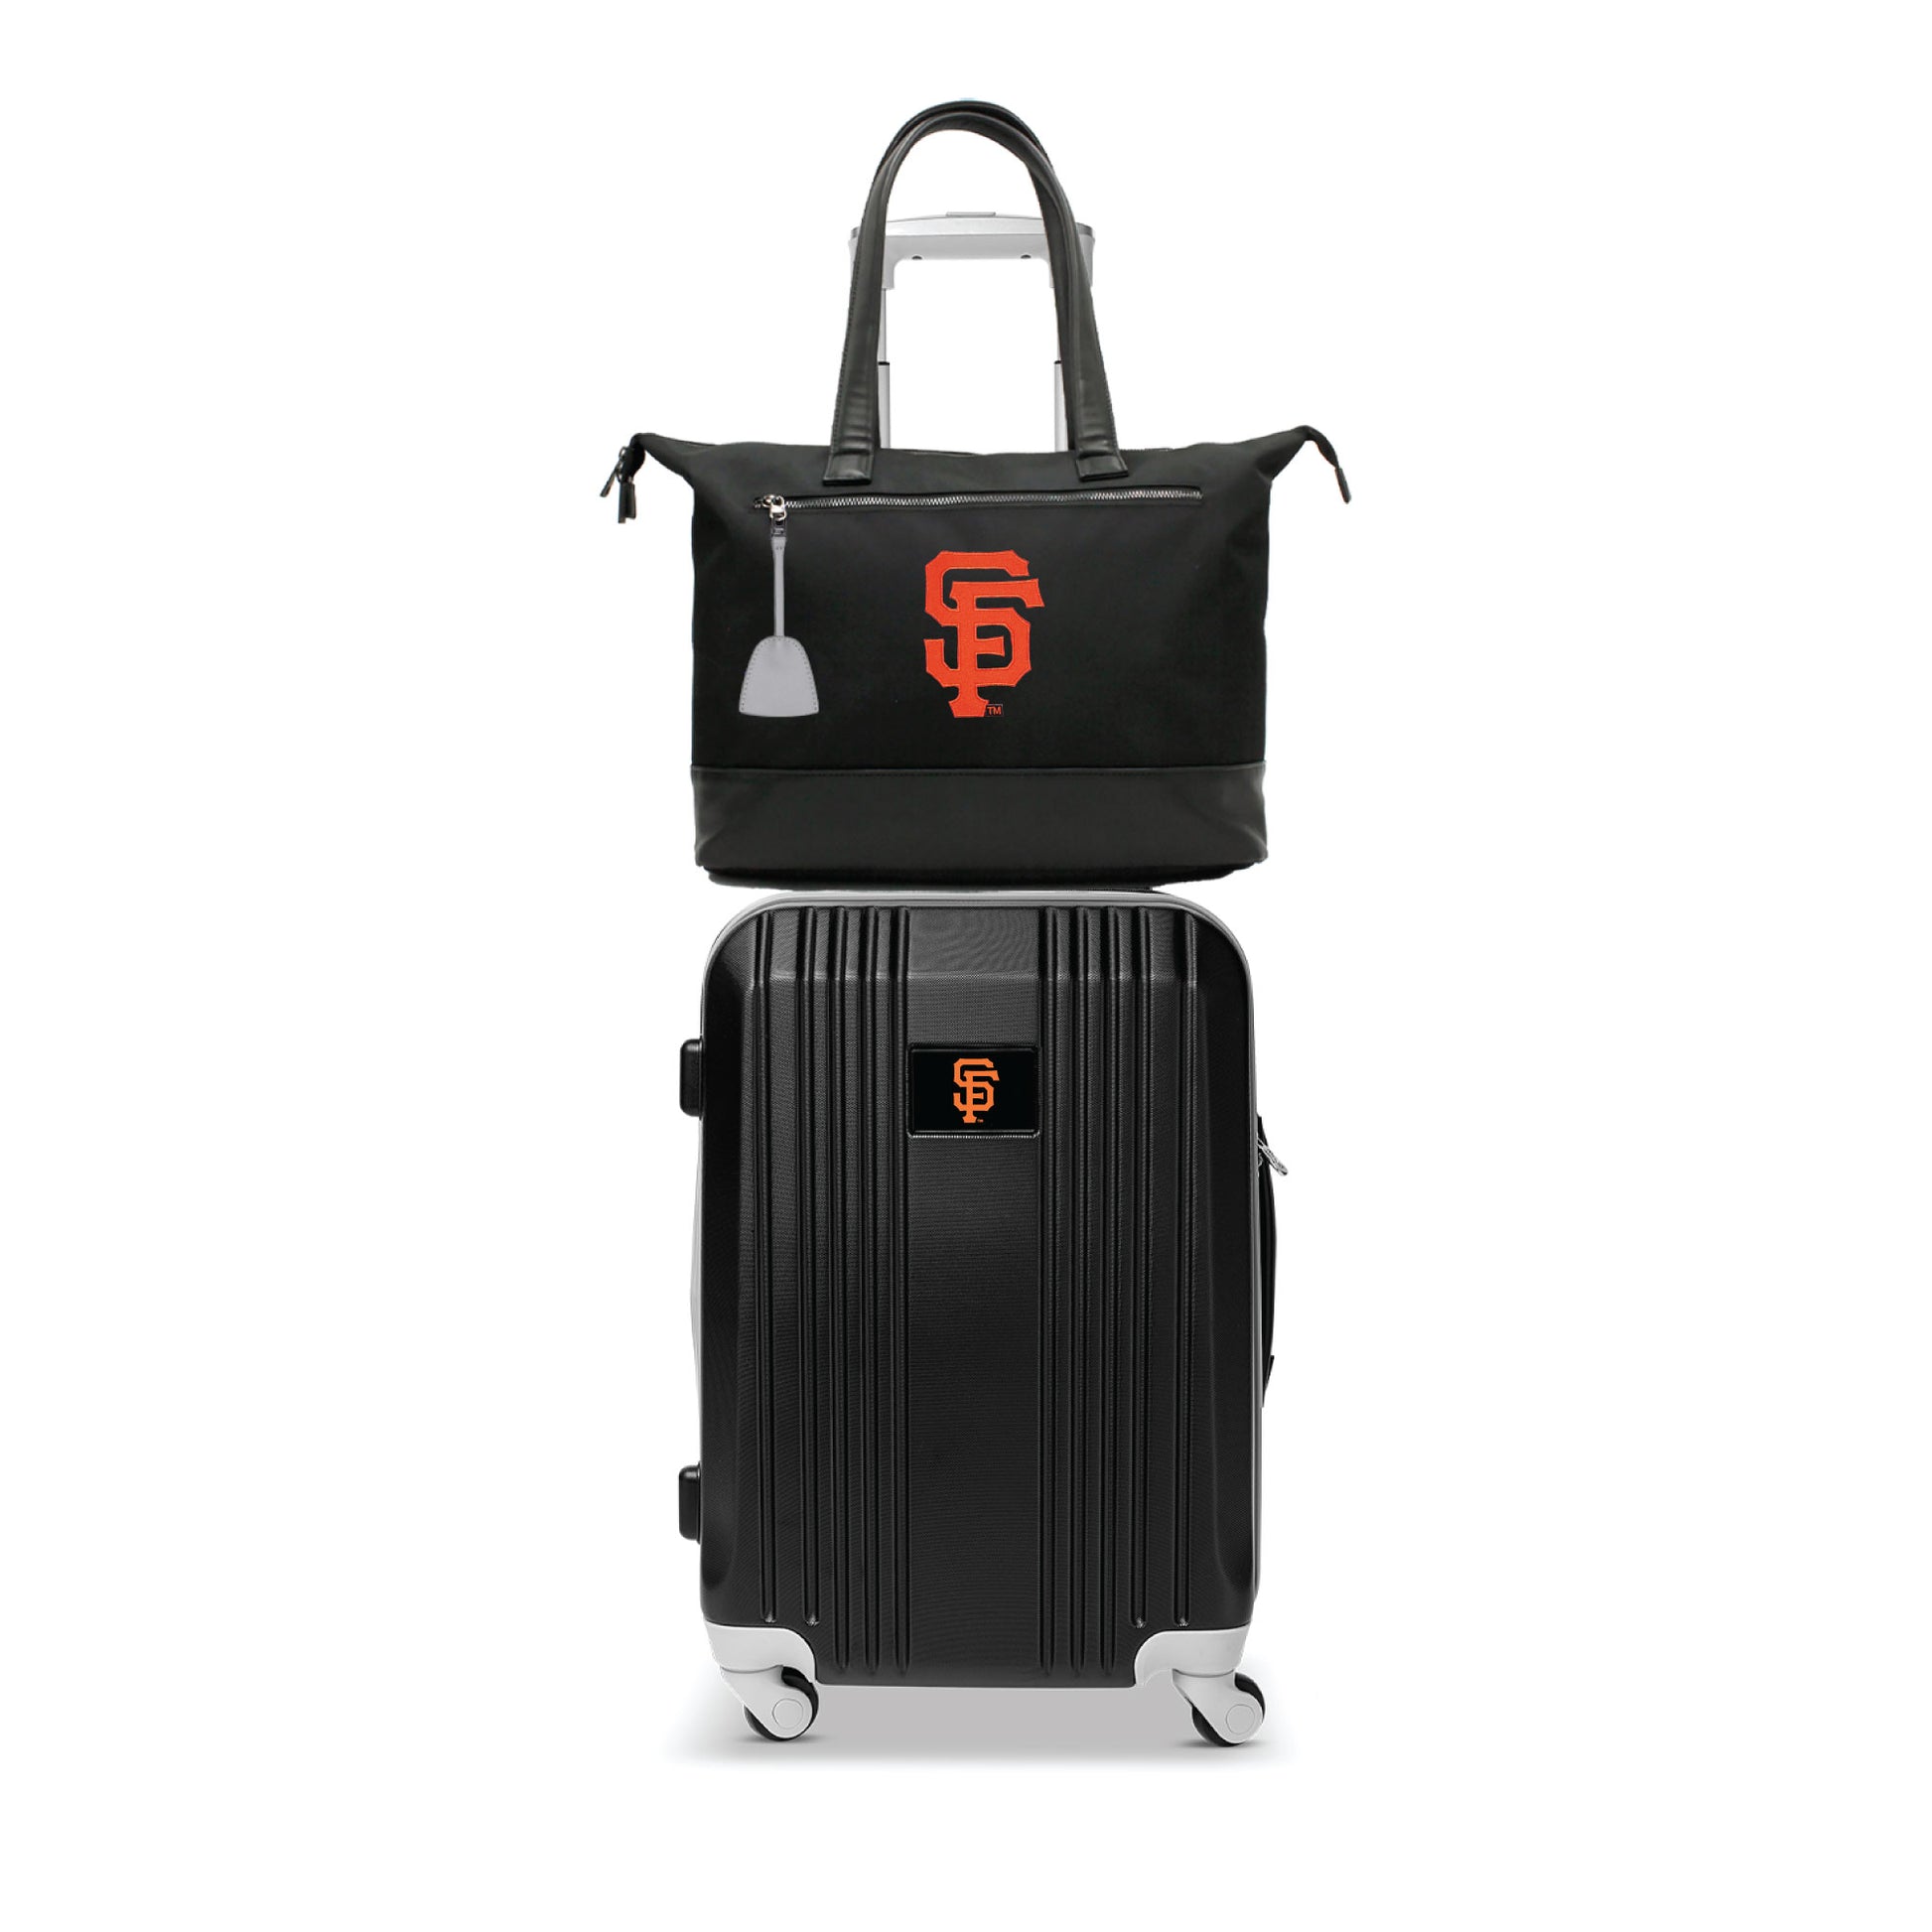 San Francisco Giants Premium Laptop Tote Bag and Luggage Set